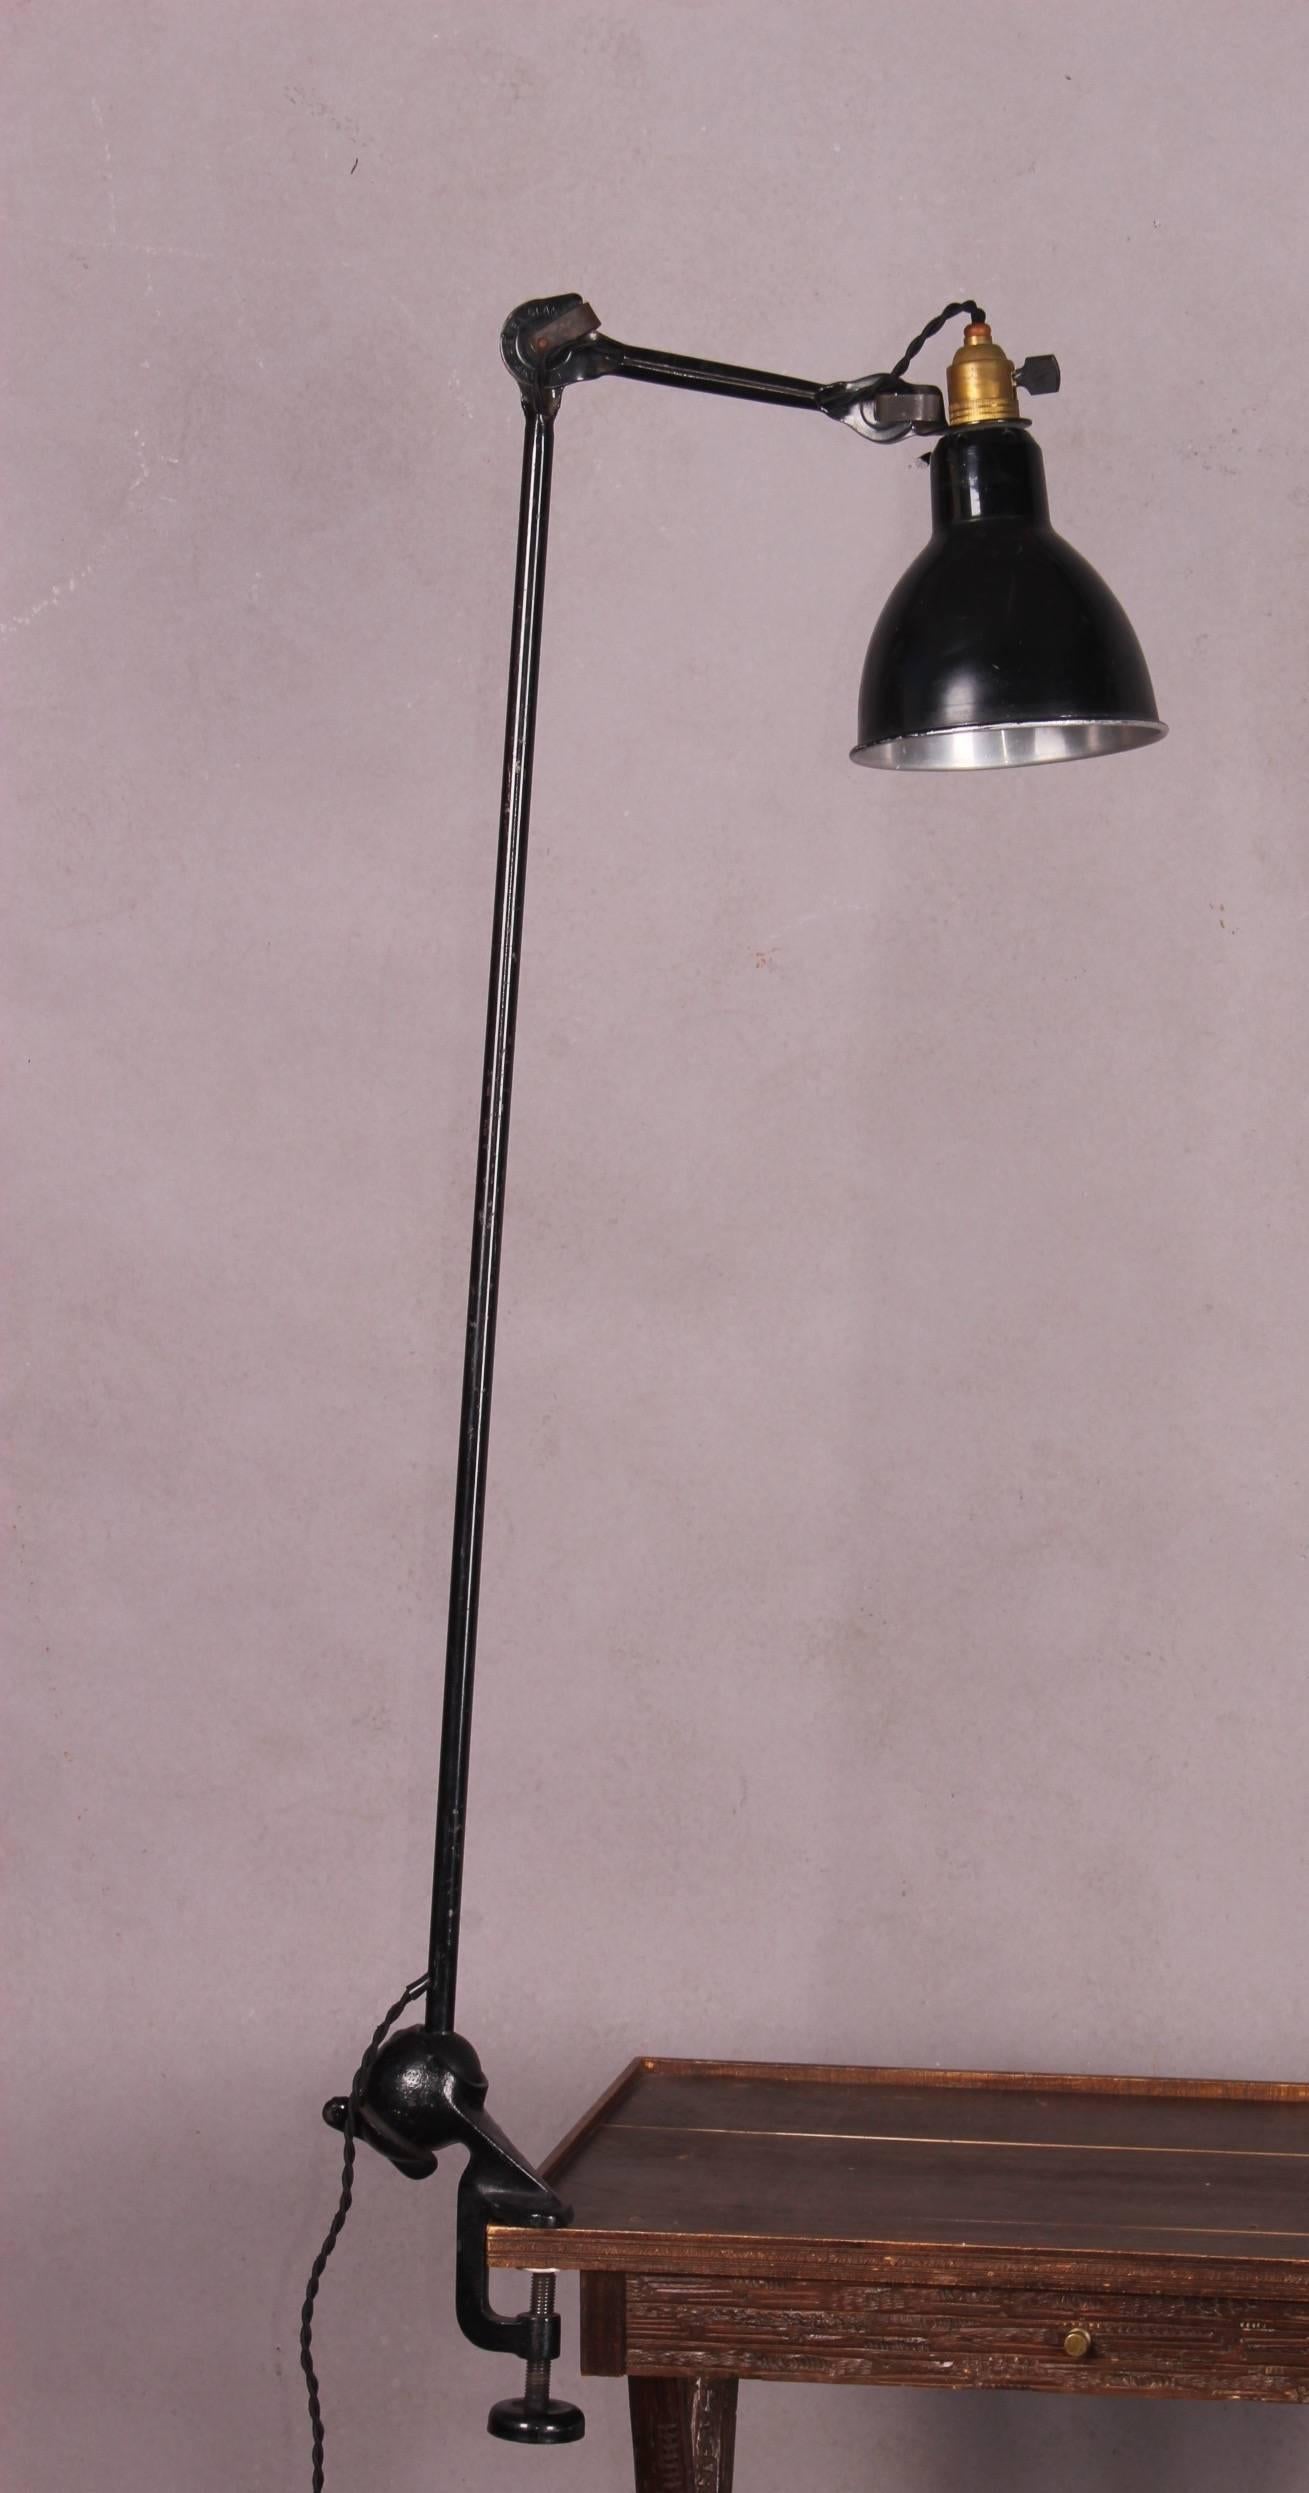 Lampe Gras table lamp, circa 1930.